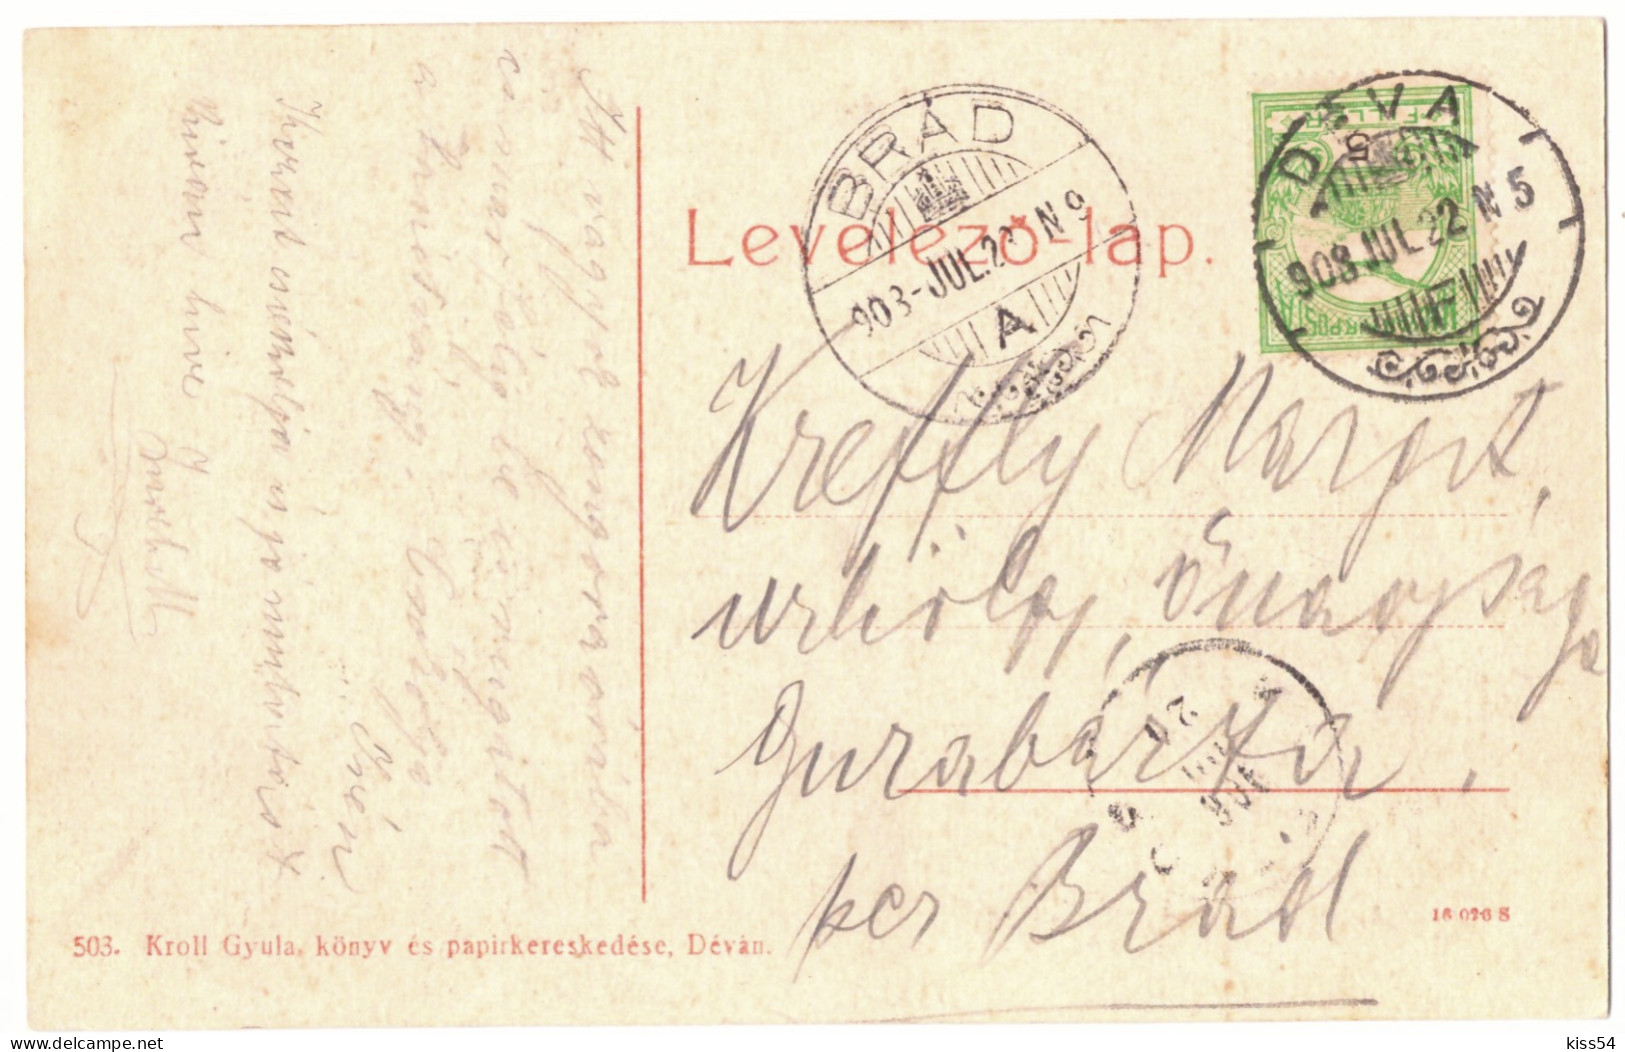 RO 40 - 21155 DEVA, Hunedoara, Romania - Old Postcard - Used - 1908 - Romania